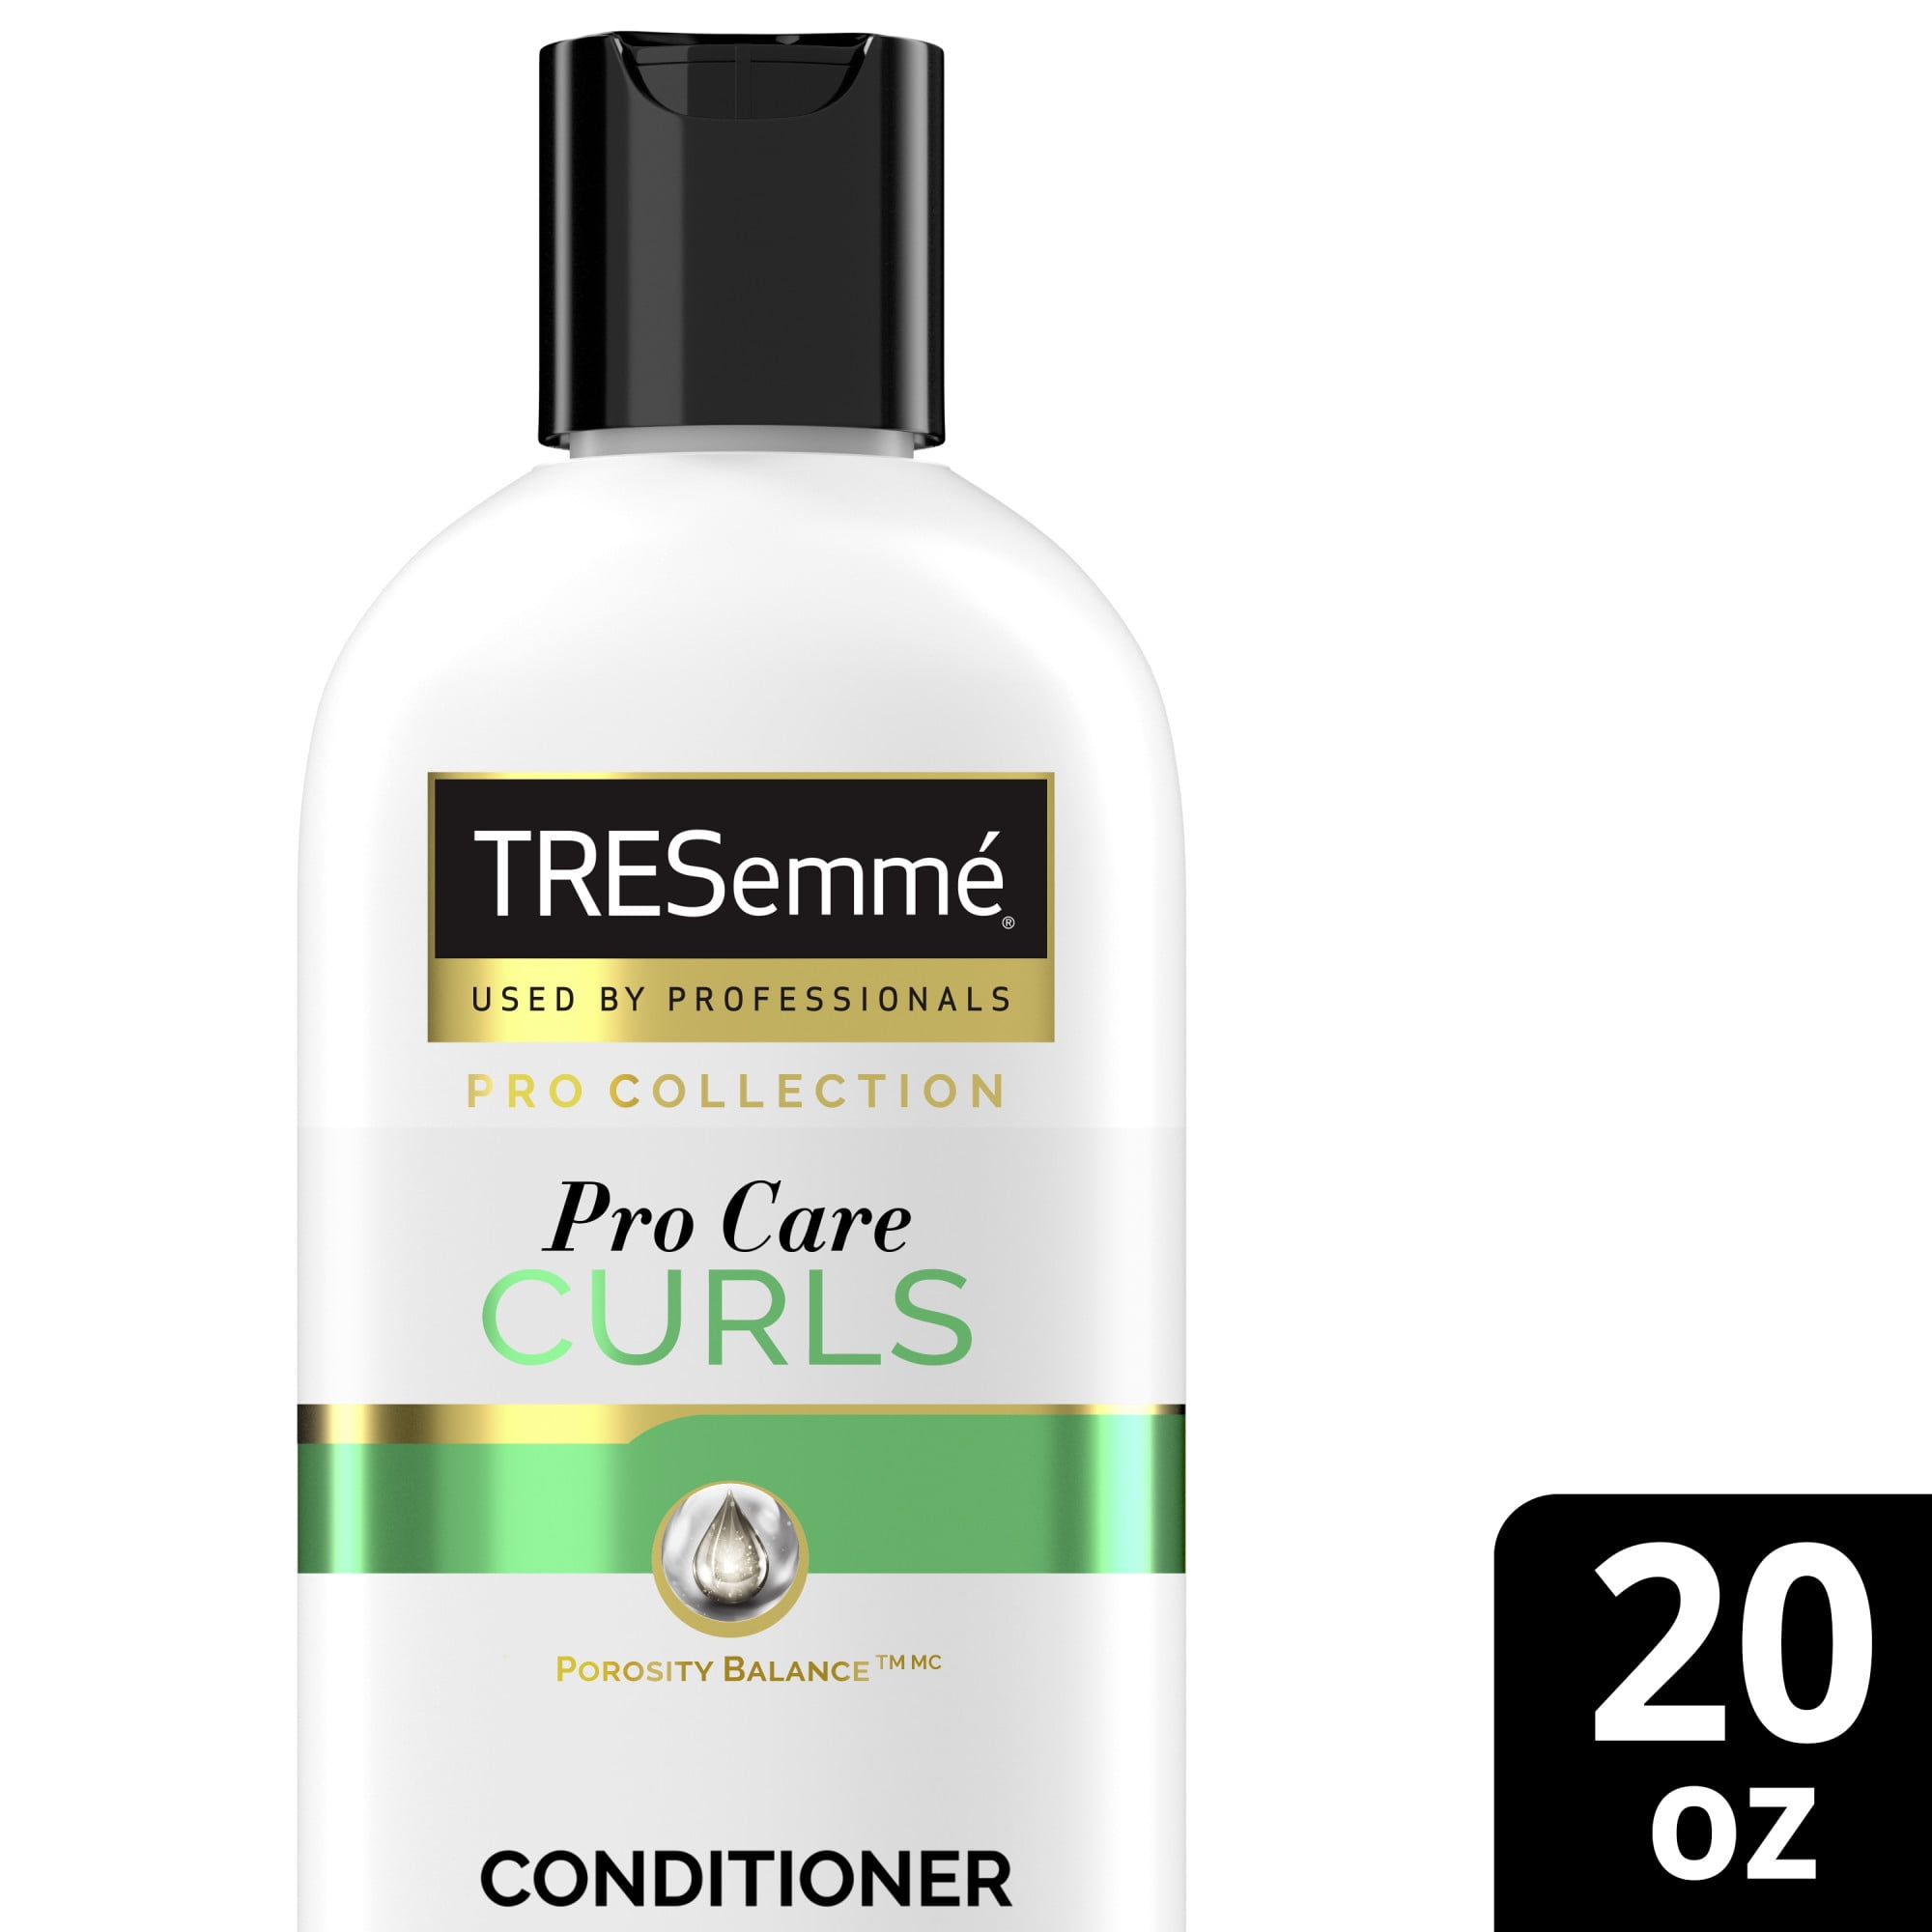 TRESemm Pro Care Curls Porosity Balance Conditioner 20 fl oz